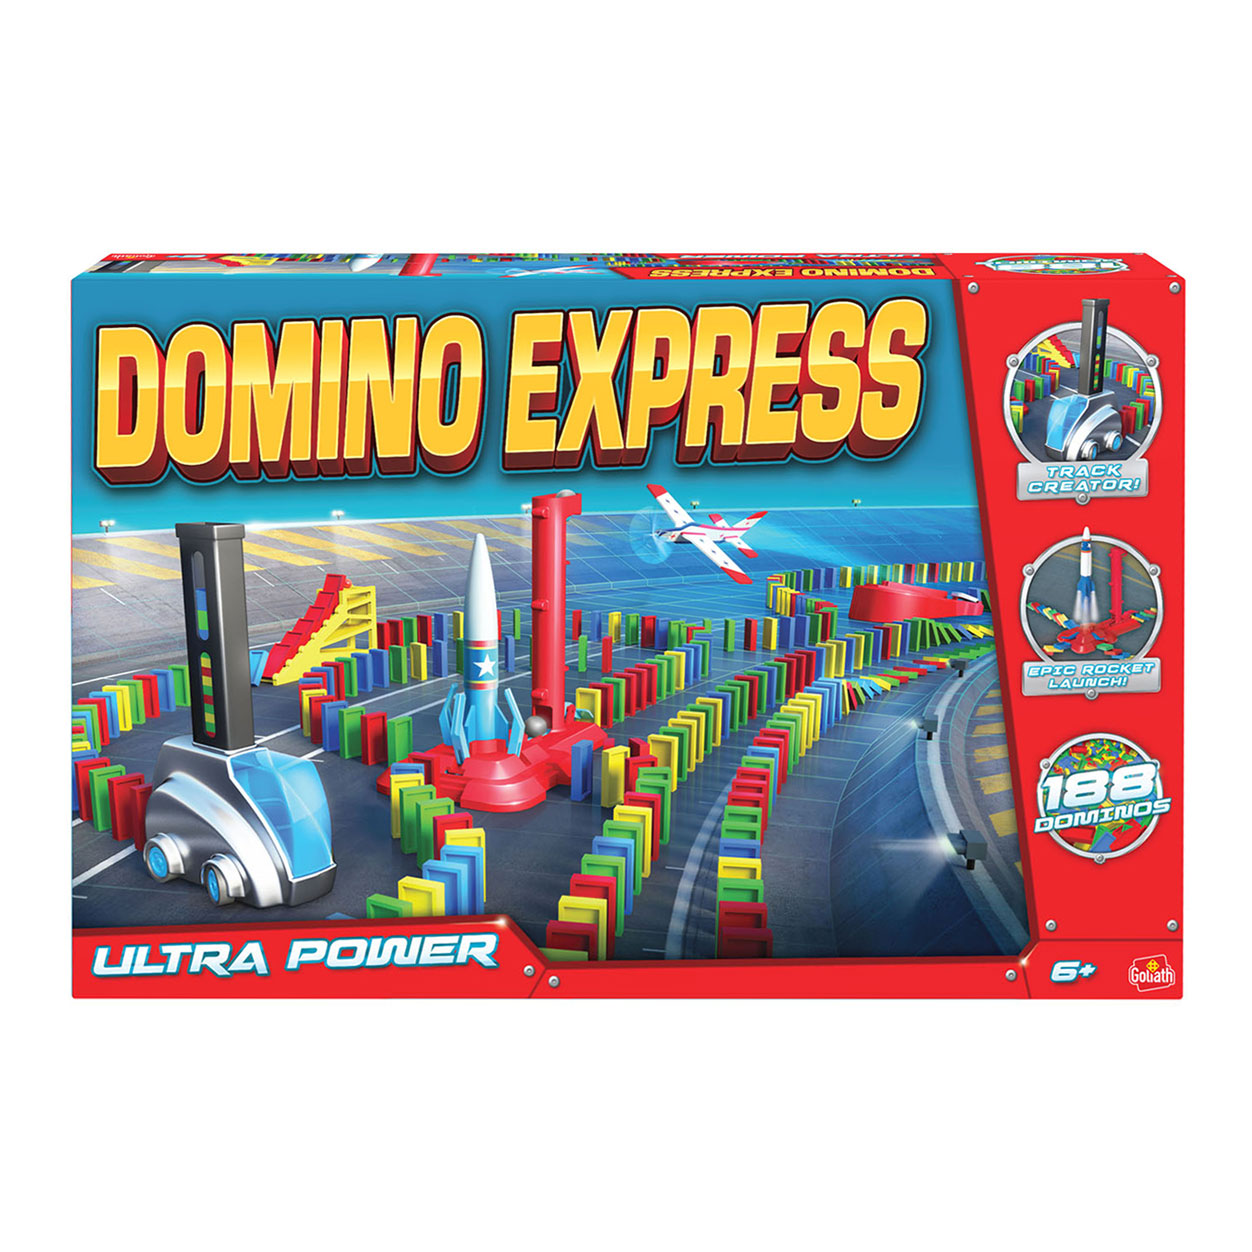 Domino Express Ultra Power